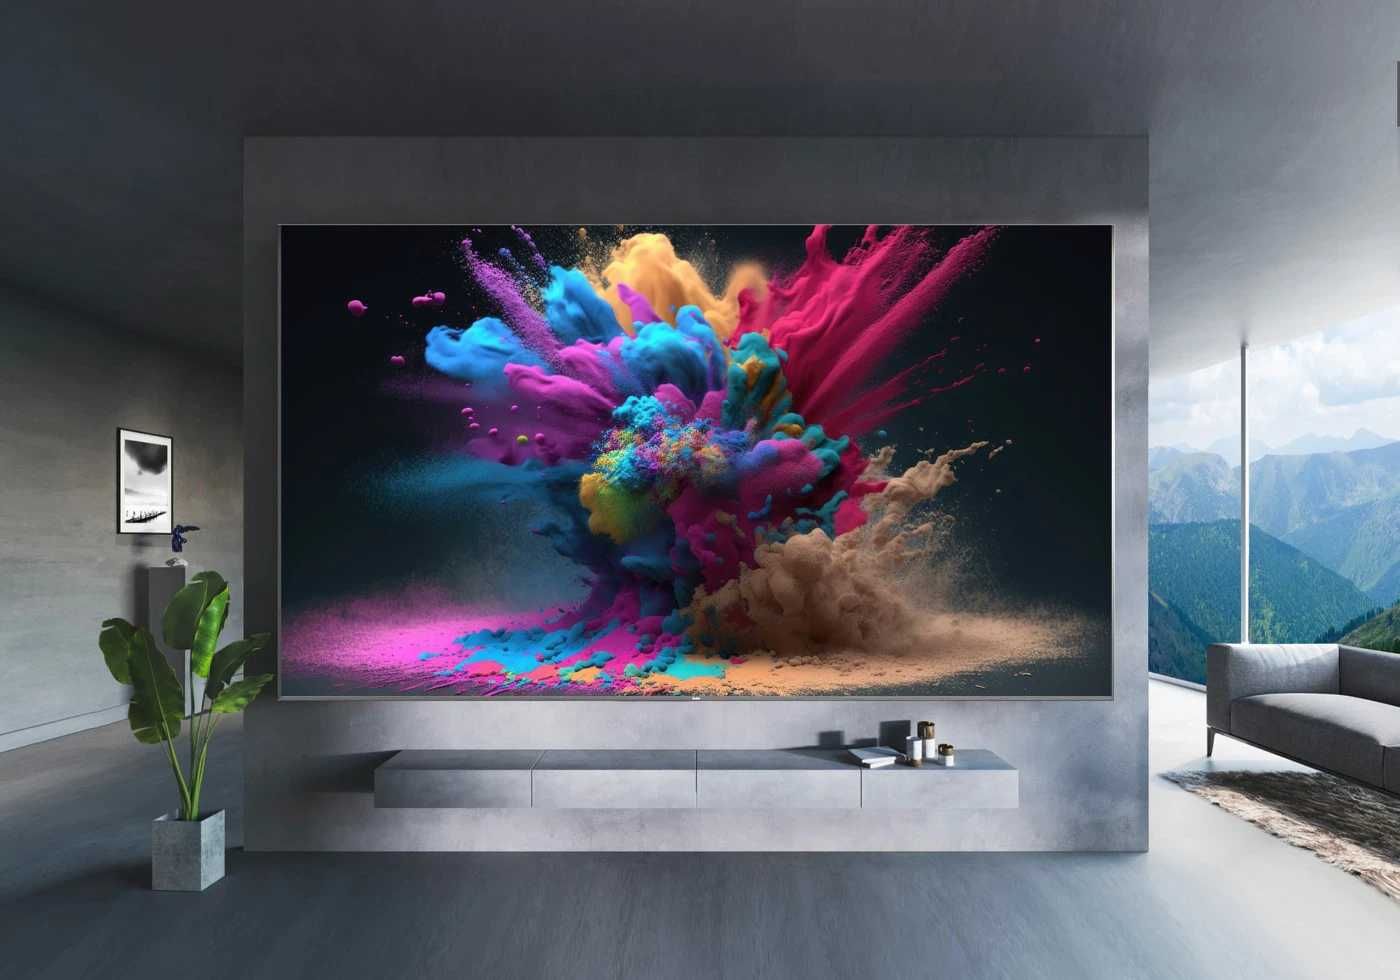 Телевизор Xiaomi TV A2 43* FHD Smart Tv + 2500 канал + доставка!